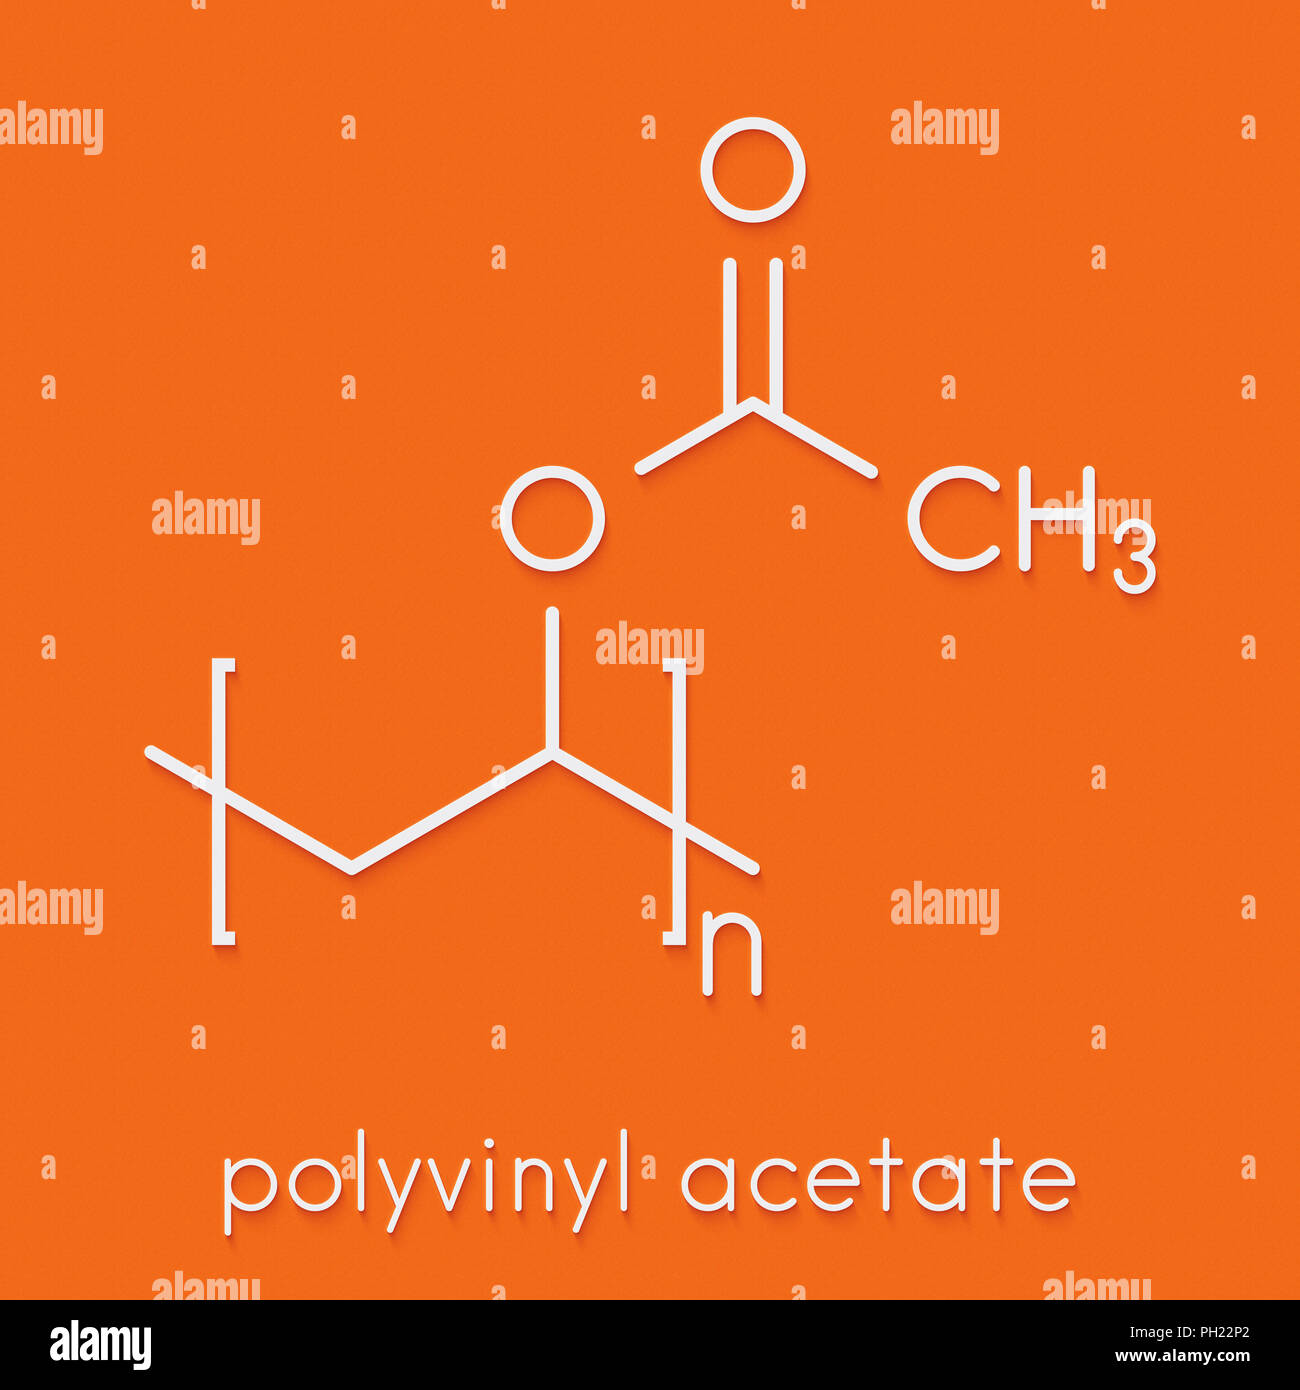 Polyvinyl acetate - Wikipedia